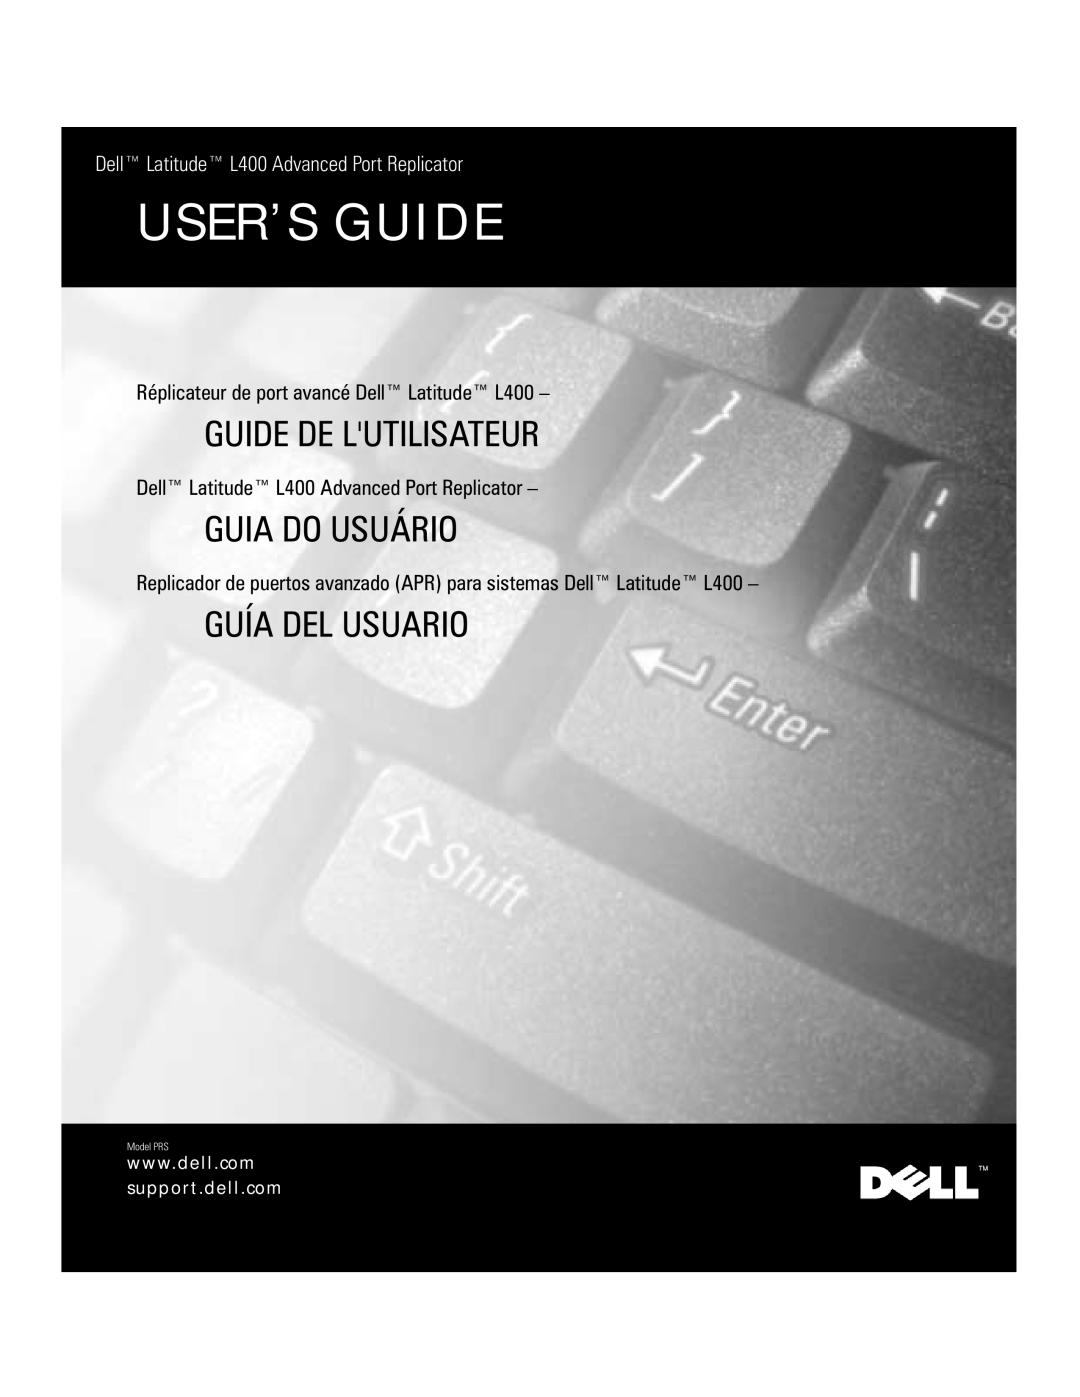 Dell L400 manual User’S Guide, HOOŒ/DWLWXGHŒ/$GYDQFHG3RUW5HSOLFDWRU, 5pSOLFDWHXUGHSRUWDYDQFpHOOŒ/DWLWXGHŒ/², 8,/87,/,6$785 